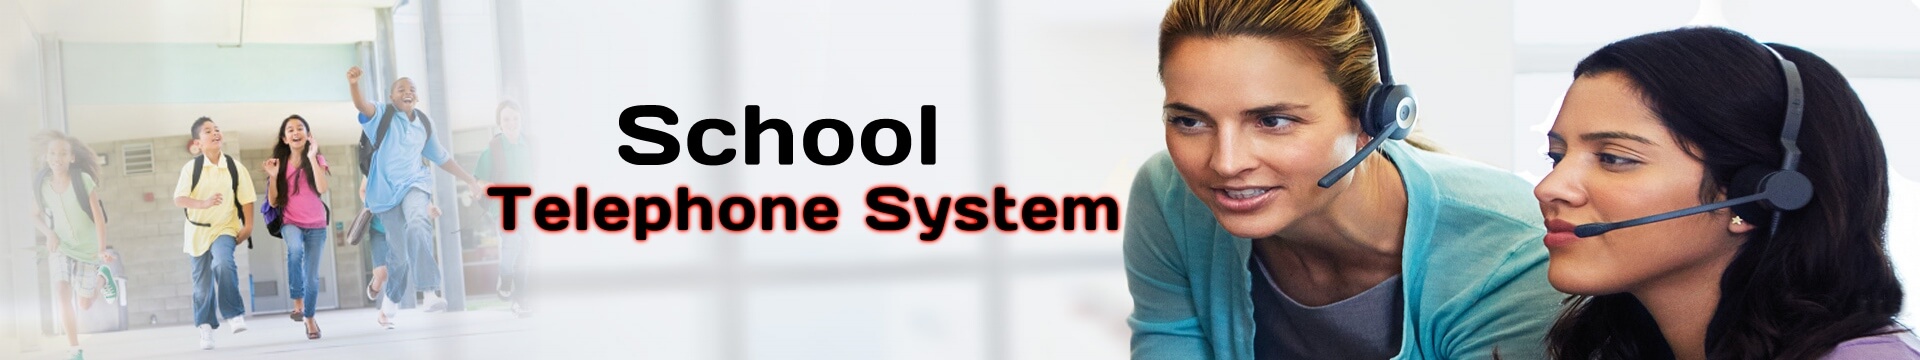 School Telephone System Dubai